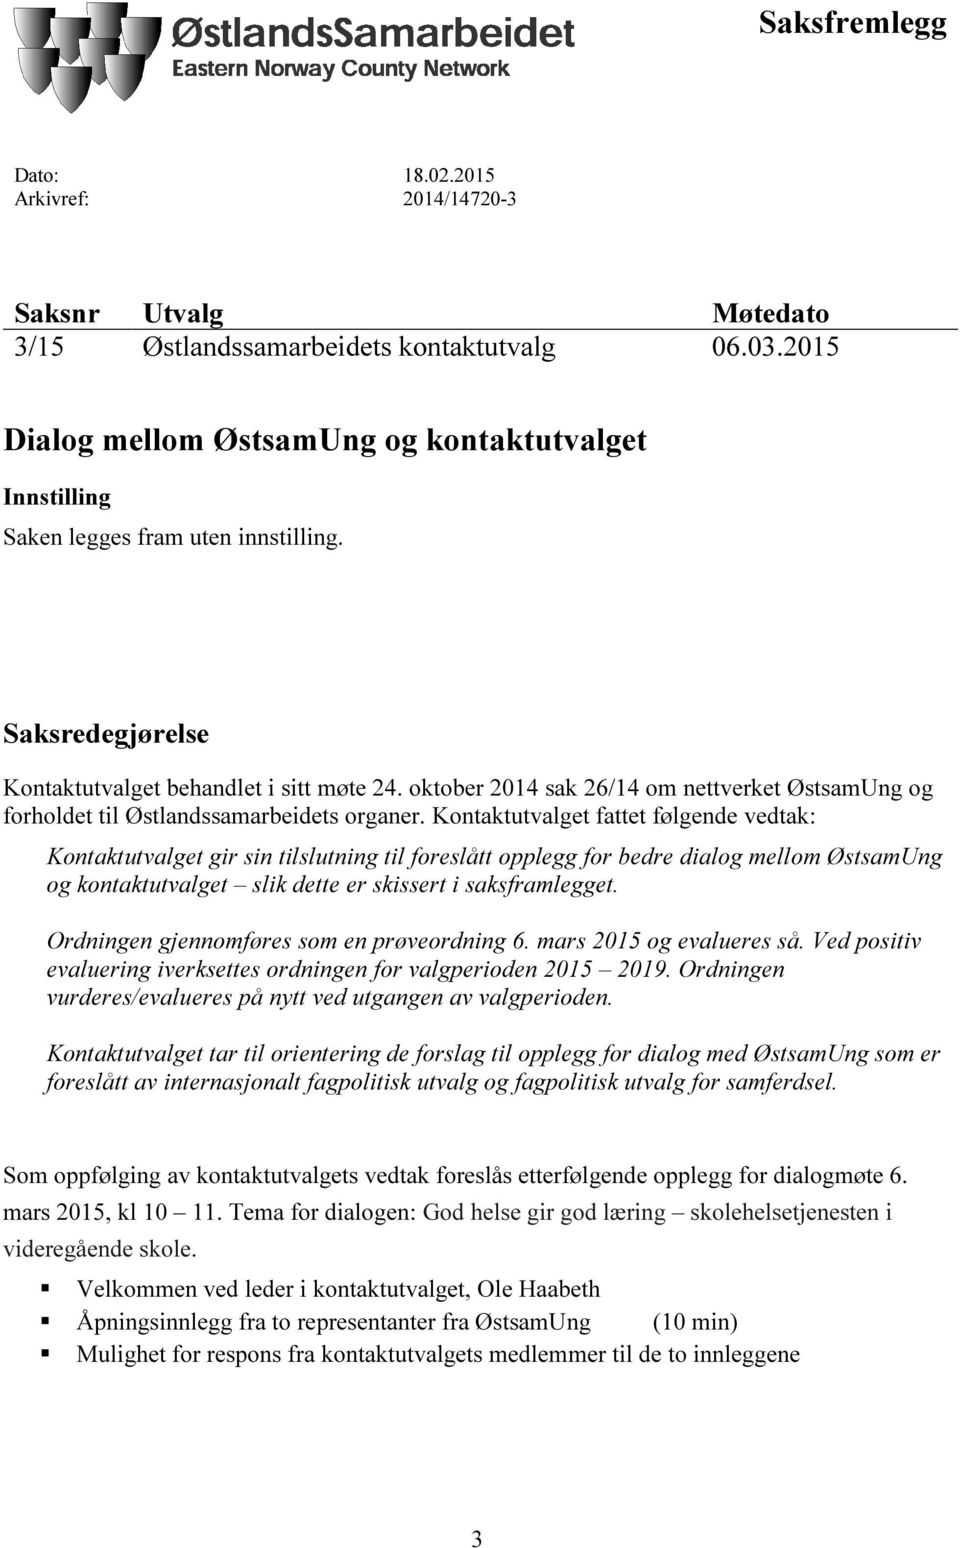 oktober 2014 sak 26/14 om nettverket ØstsamUng og forholdet til Østlandssamarbeidets organer.